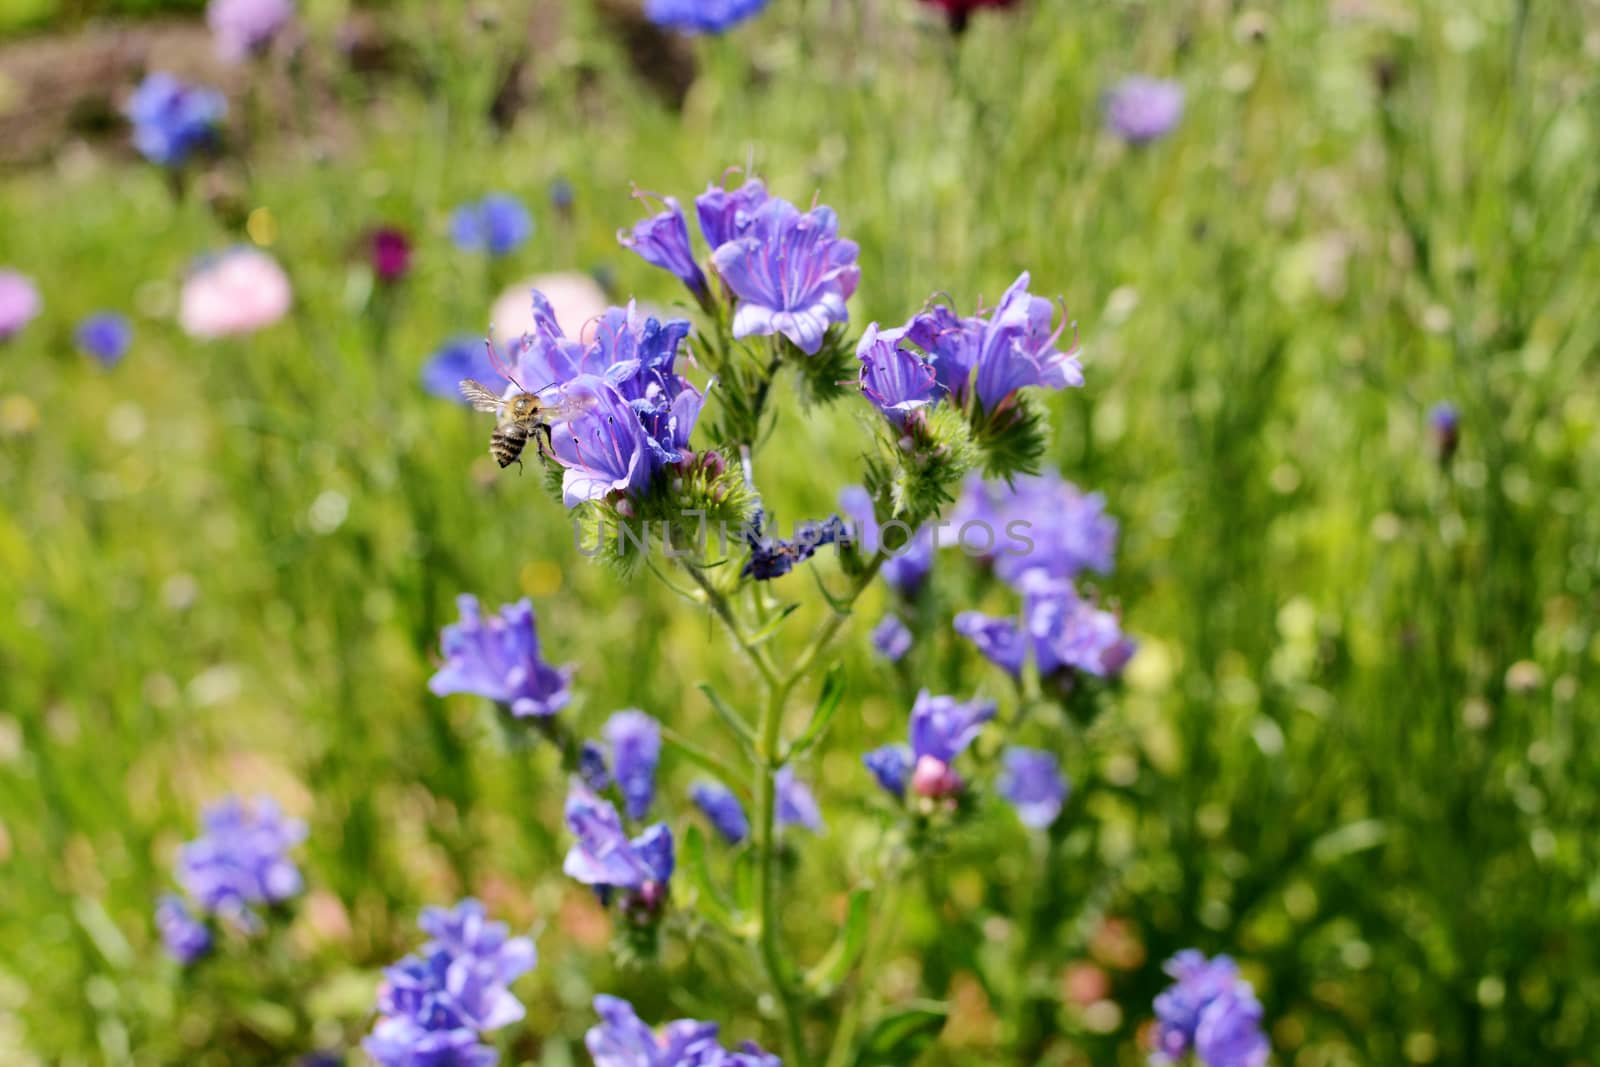 Shrill carder bee, bombus sylvarum, landing on a blue viper's bugloss flower in a wildflower garden